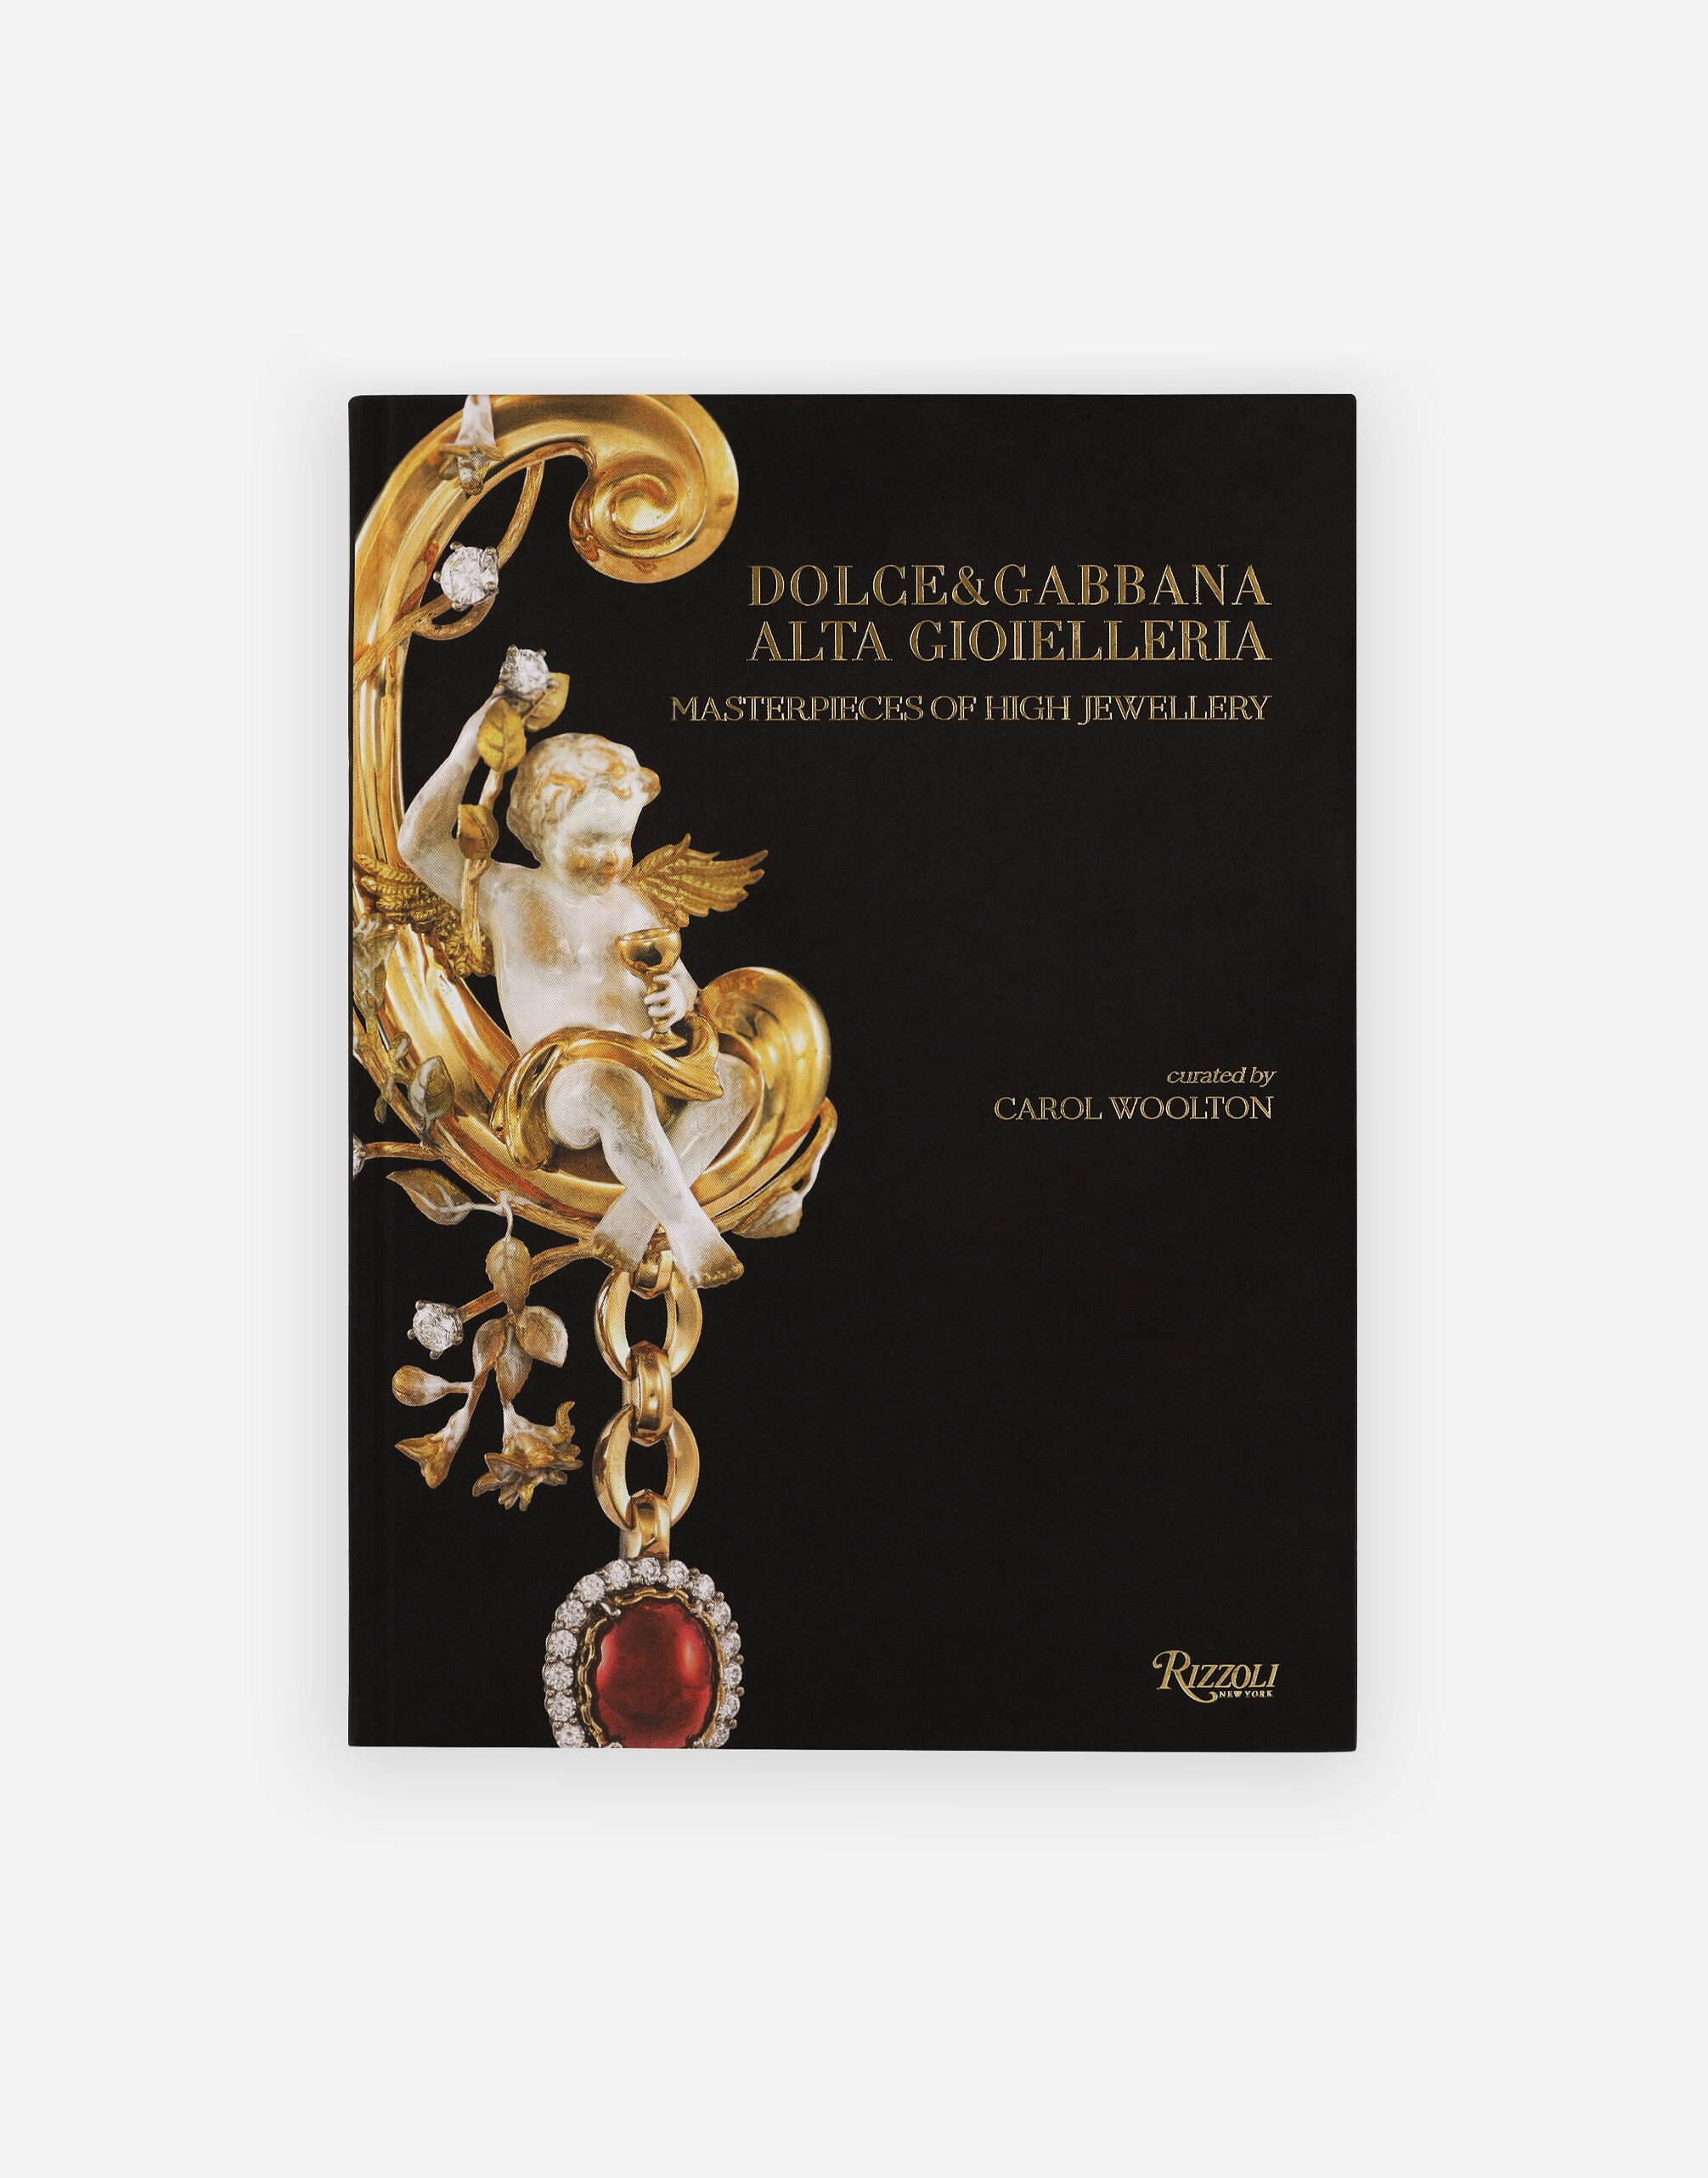 Dolce & Gabbana Dolce & Gabbana Alta Gioielleria: Masterpieces of High Jewellery Mehrfarbig VL1132VLTW2